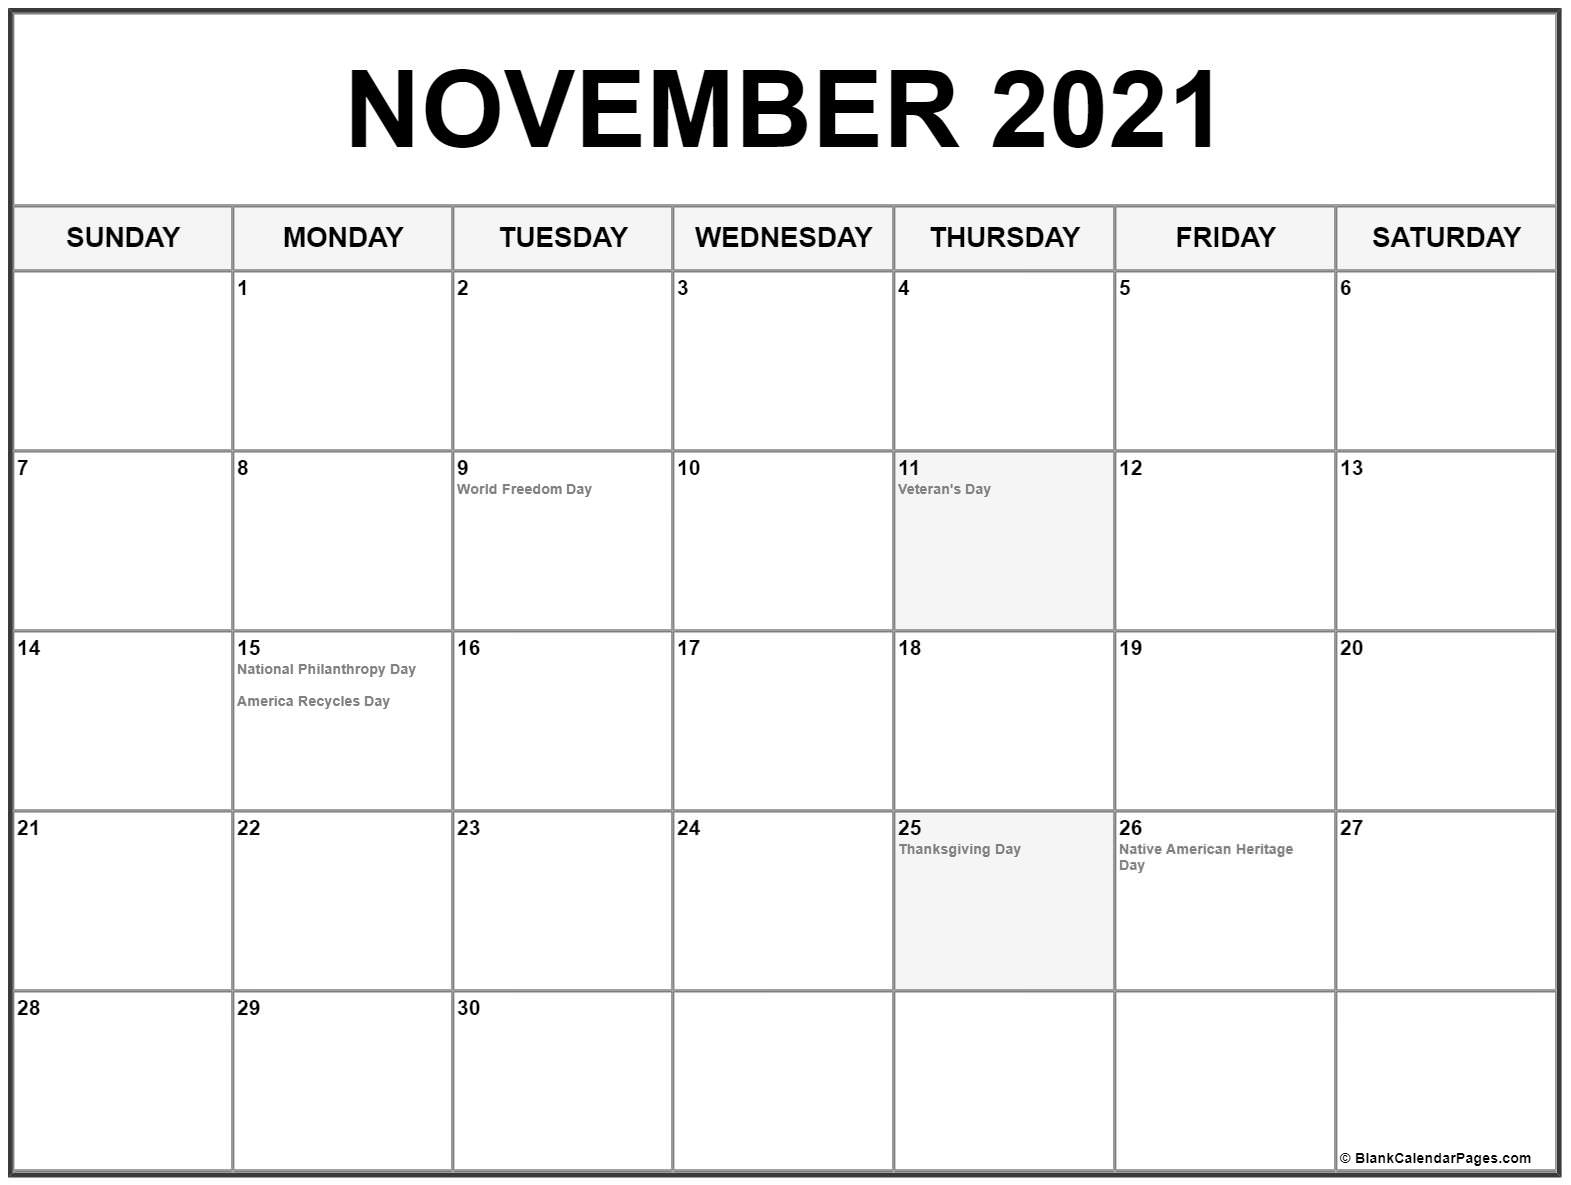 November 2021 Calendar Holidays Printable | Avnitasoni November To January 2021 Calendar